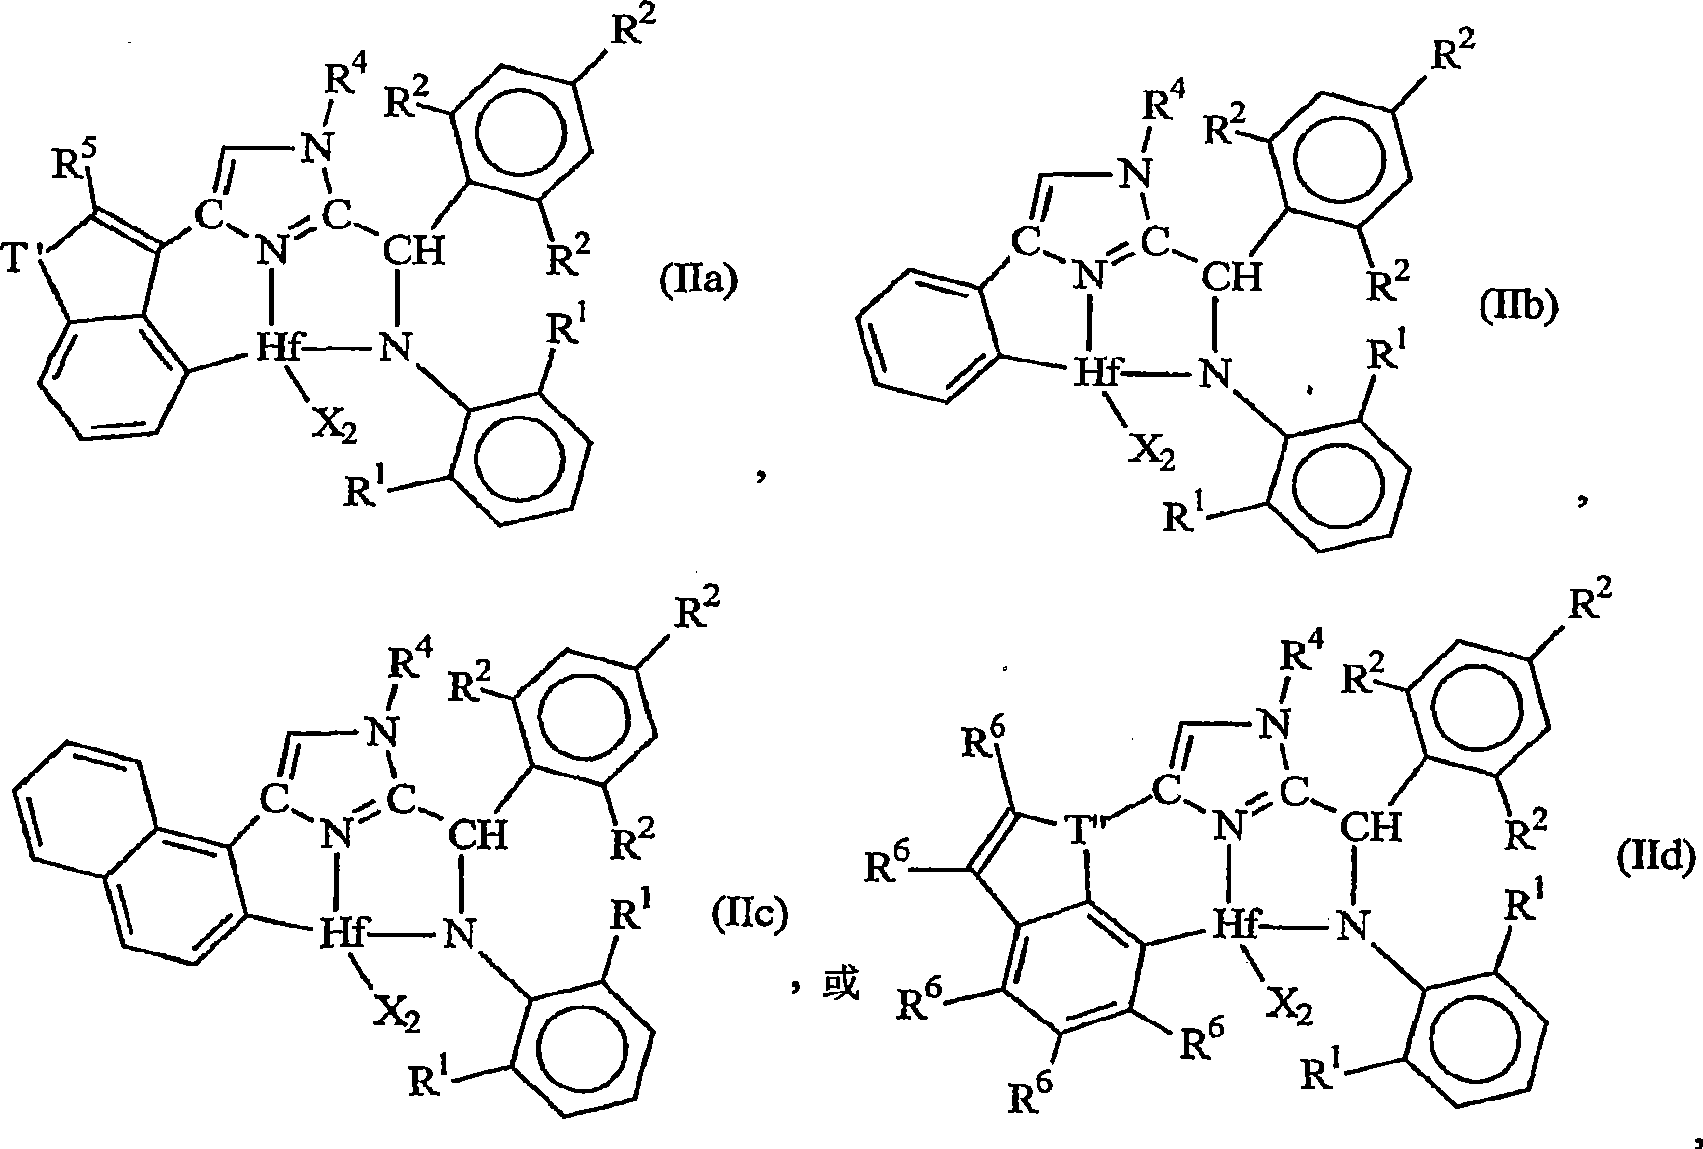 Ortho-metallated hafnium complexes of imidazole ligands